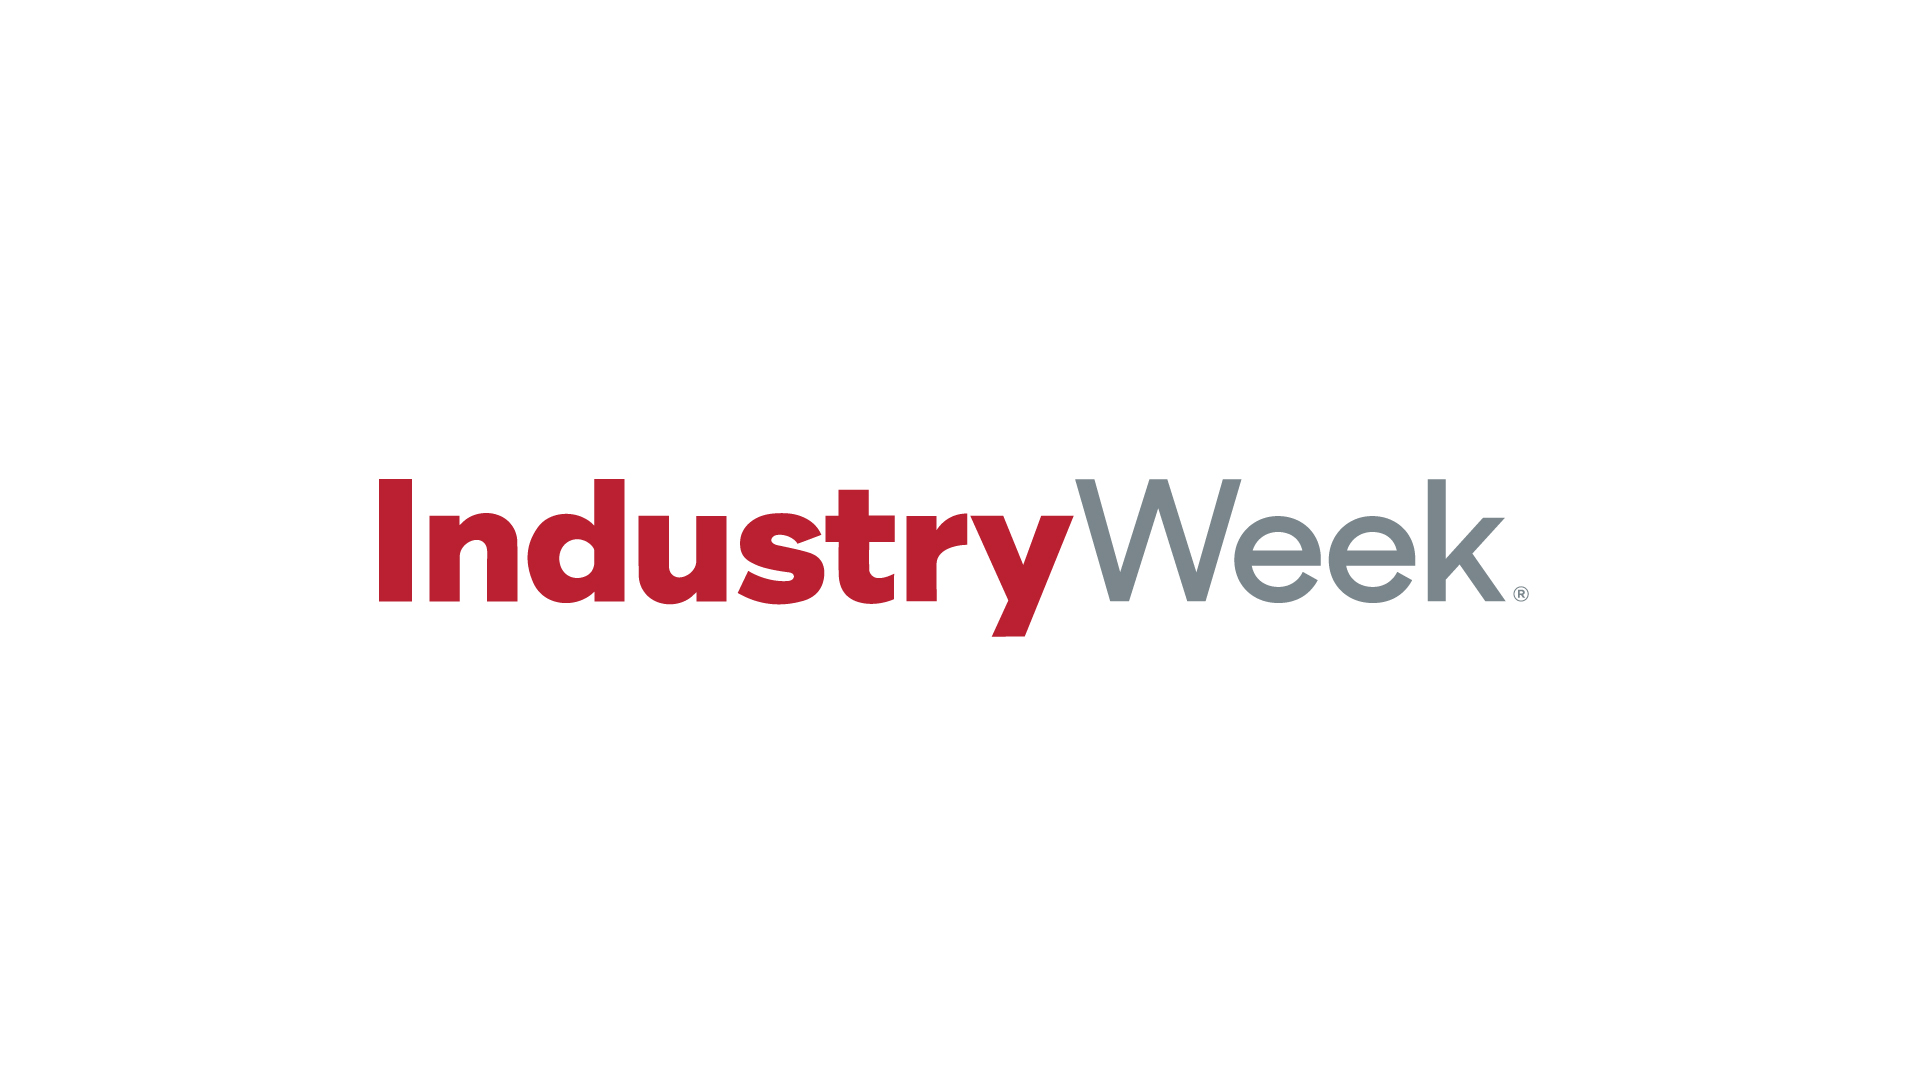 Industry Week Logo